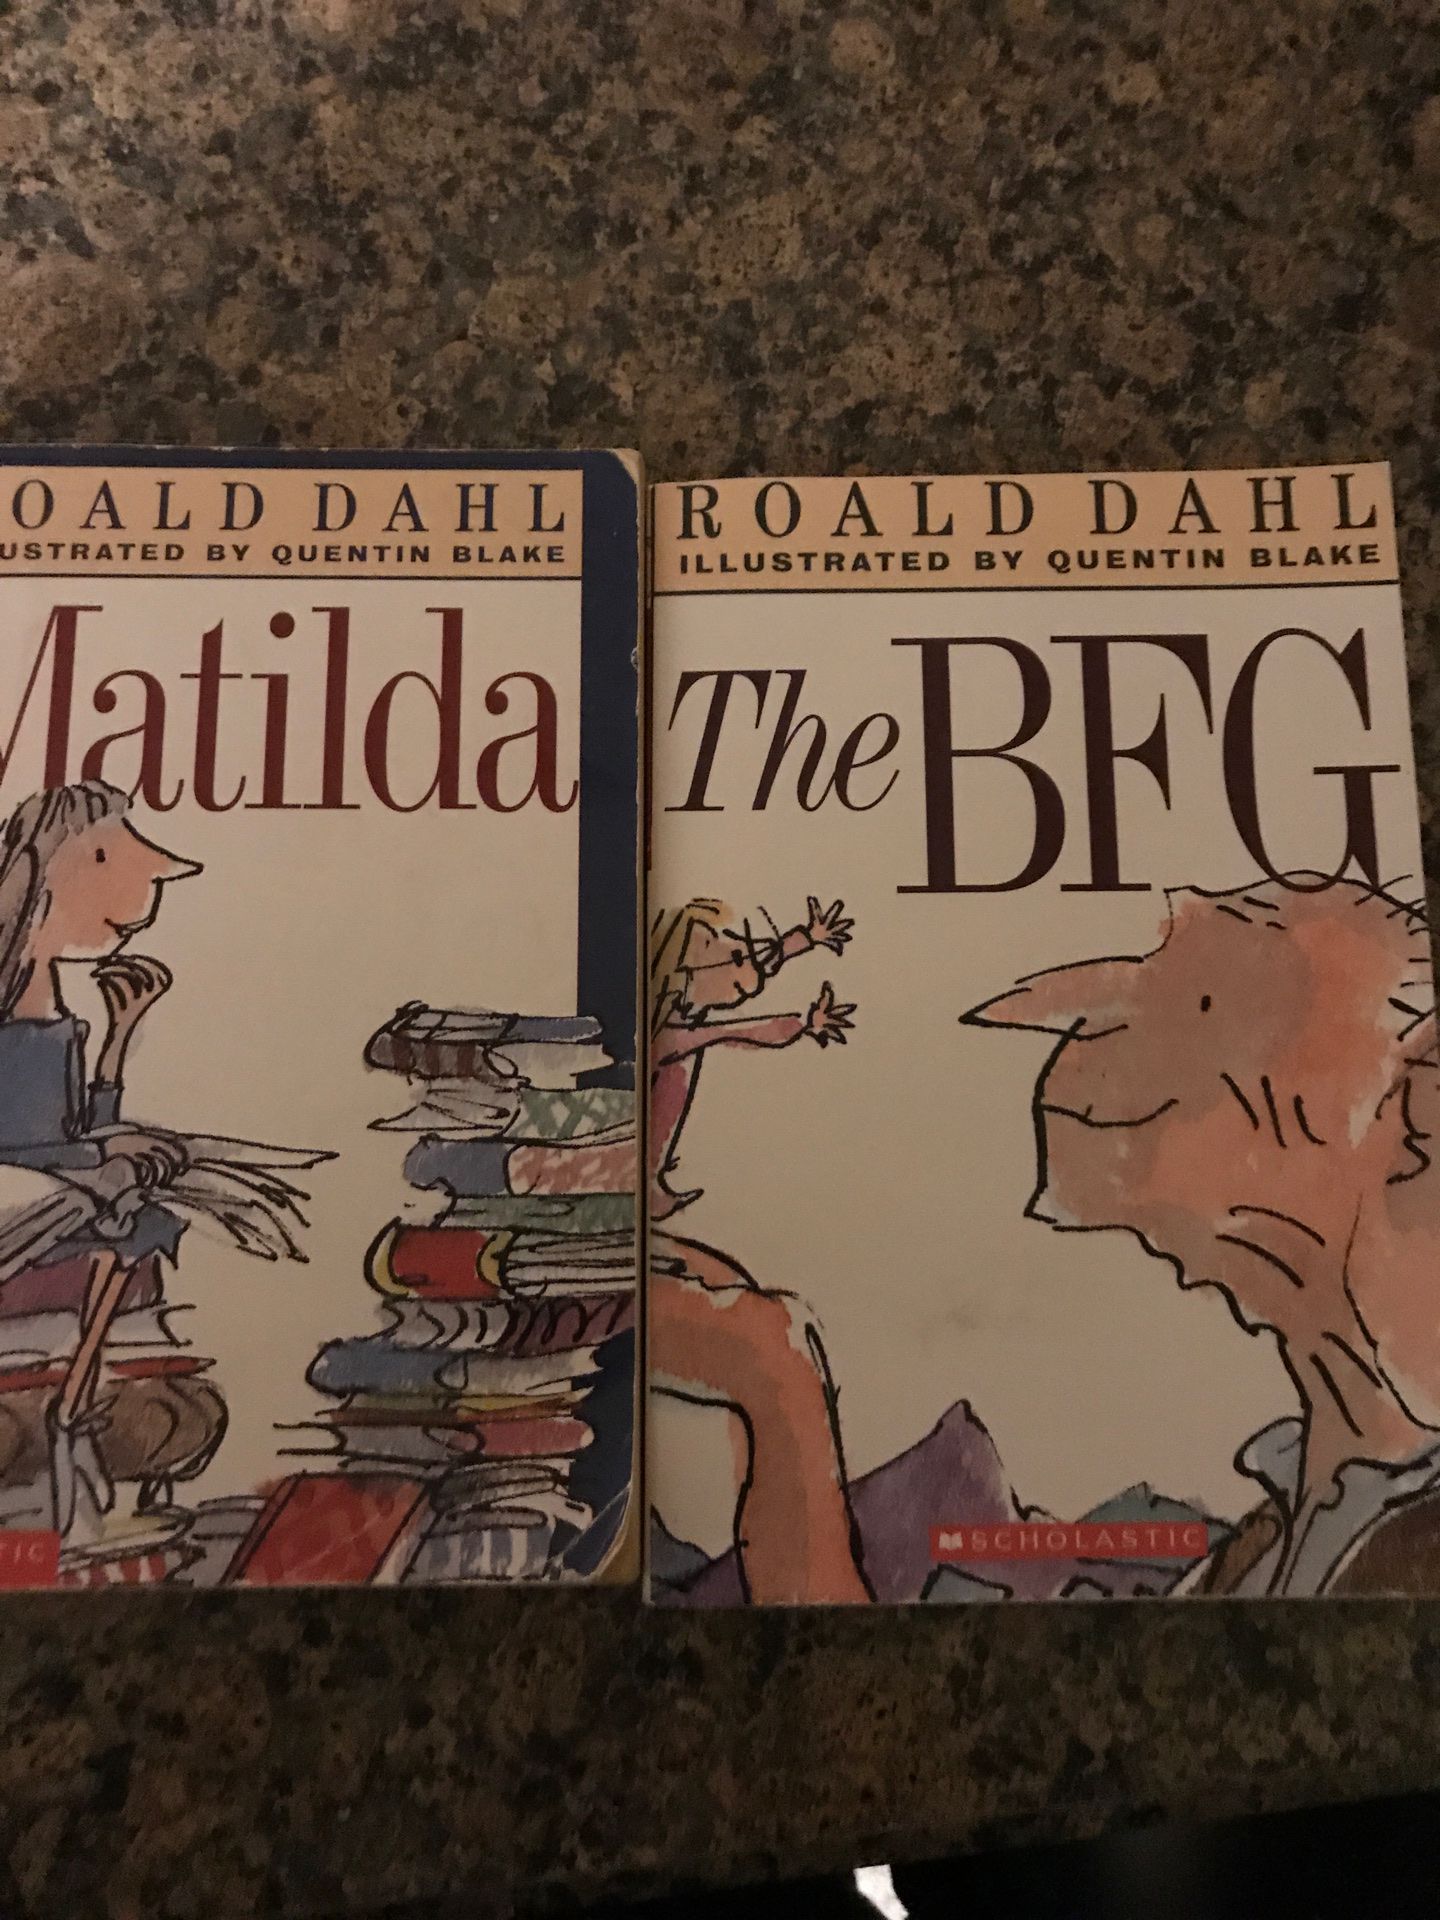 2-Roald Dahl Books-The BFG and Matilda